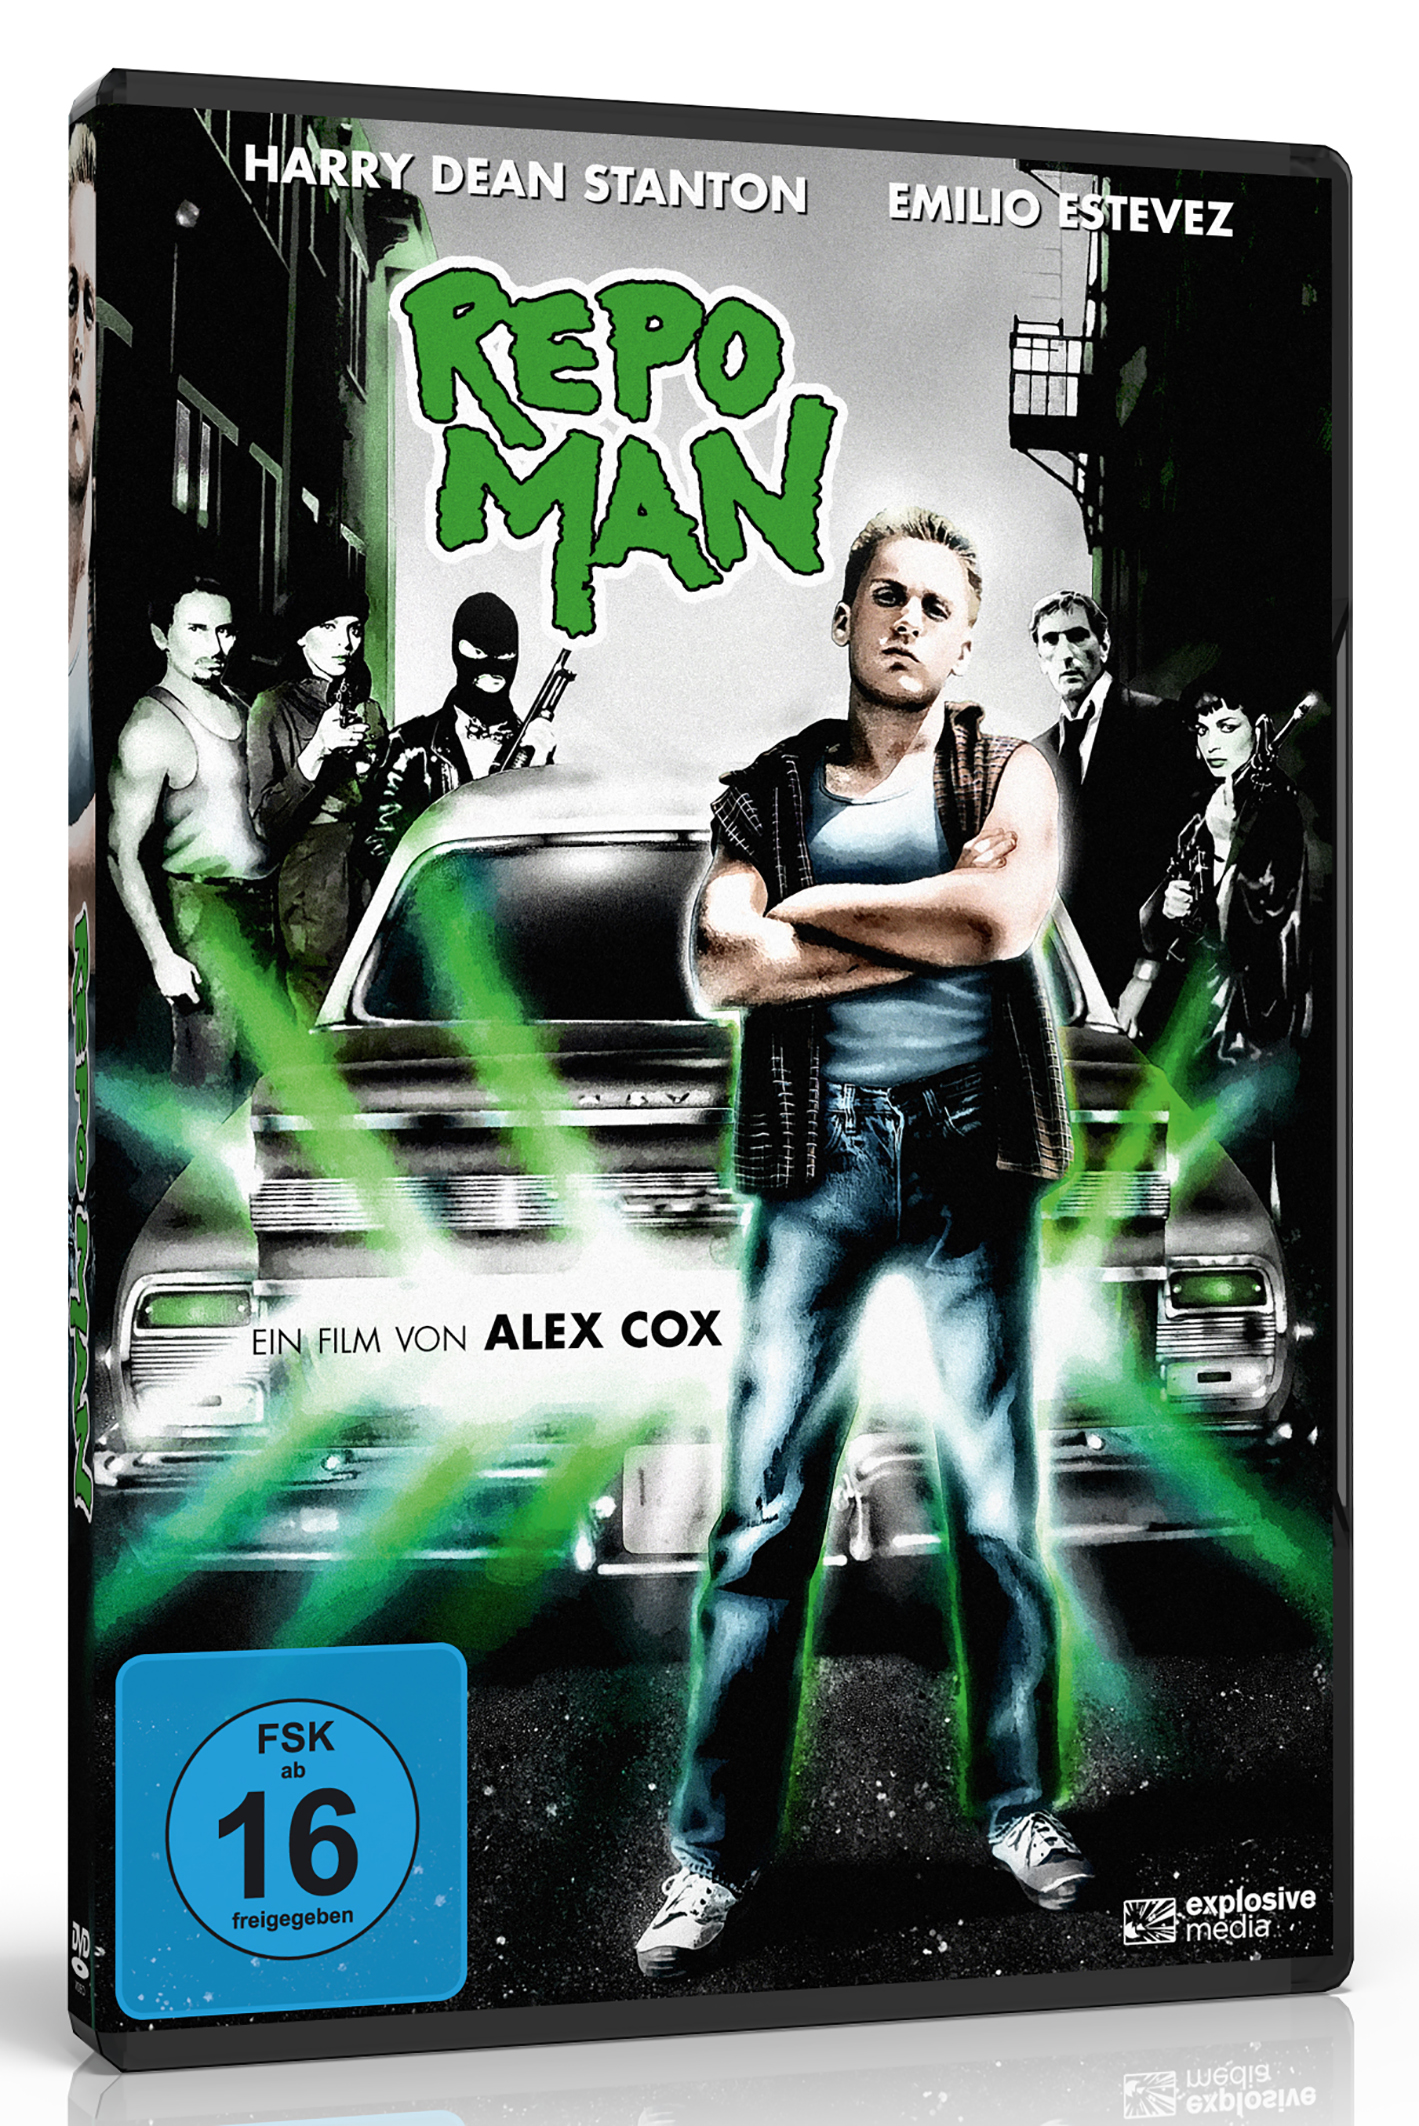 Repo Man (DVD) Image 2